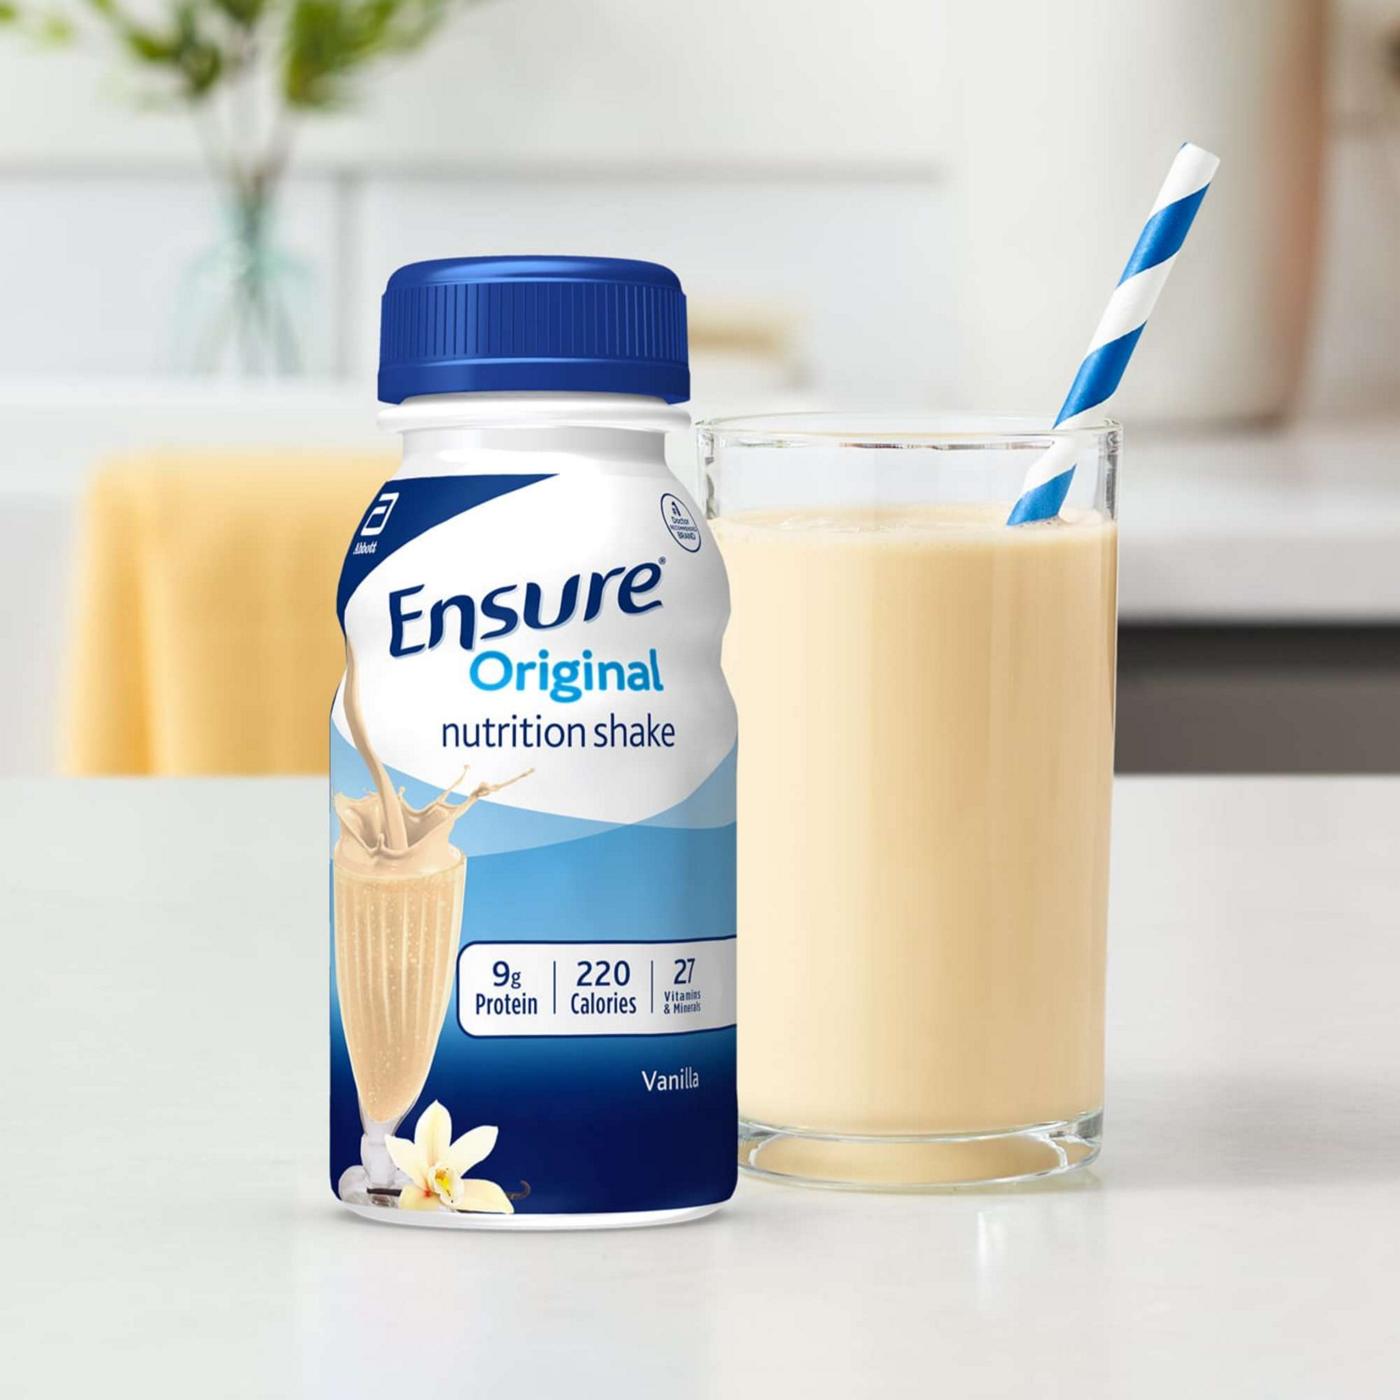 Ensure Original Nutrition Shake - Vanilla; image 6 of 10